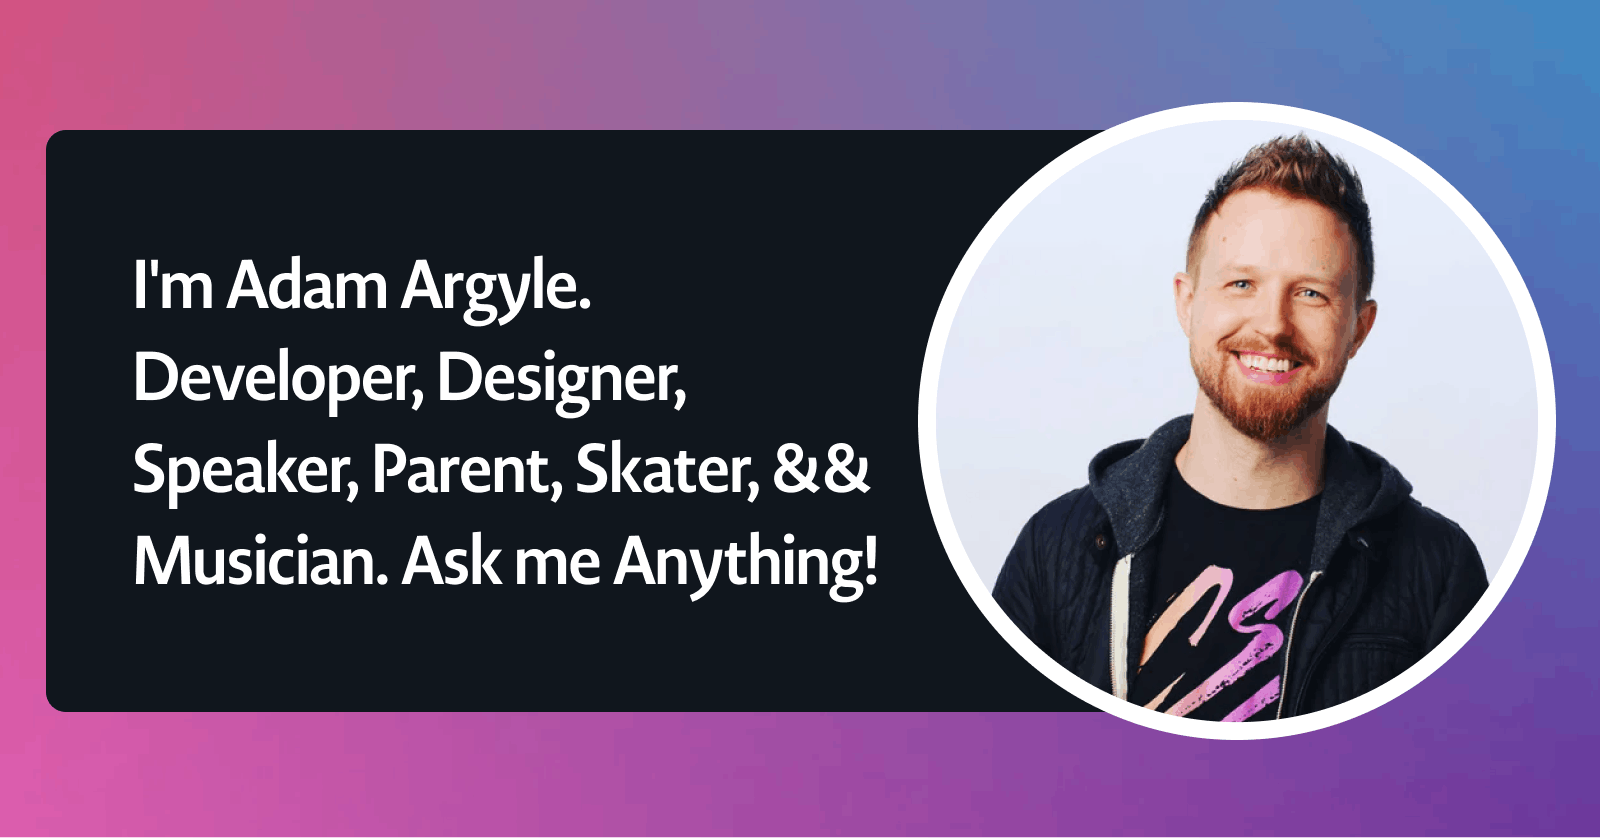 AMA: I'm Adam Argyle. Developer, Designer, Speaker, Parent, Skater, && Musician. Ask me Anything!